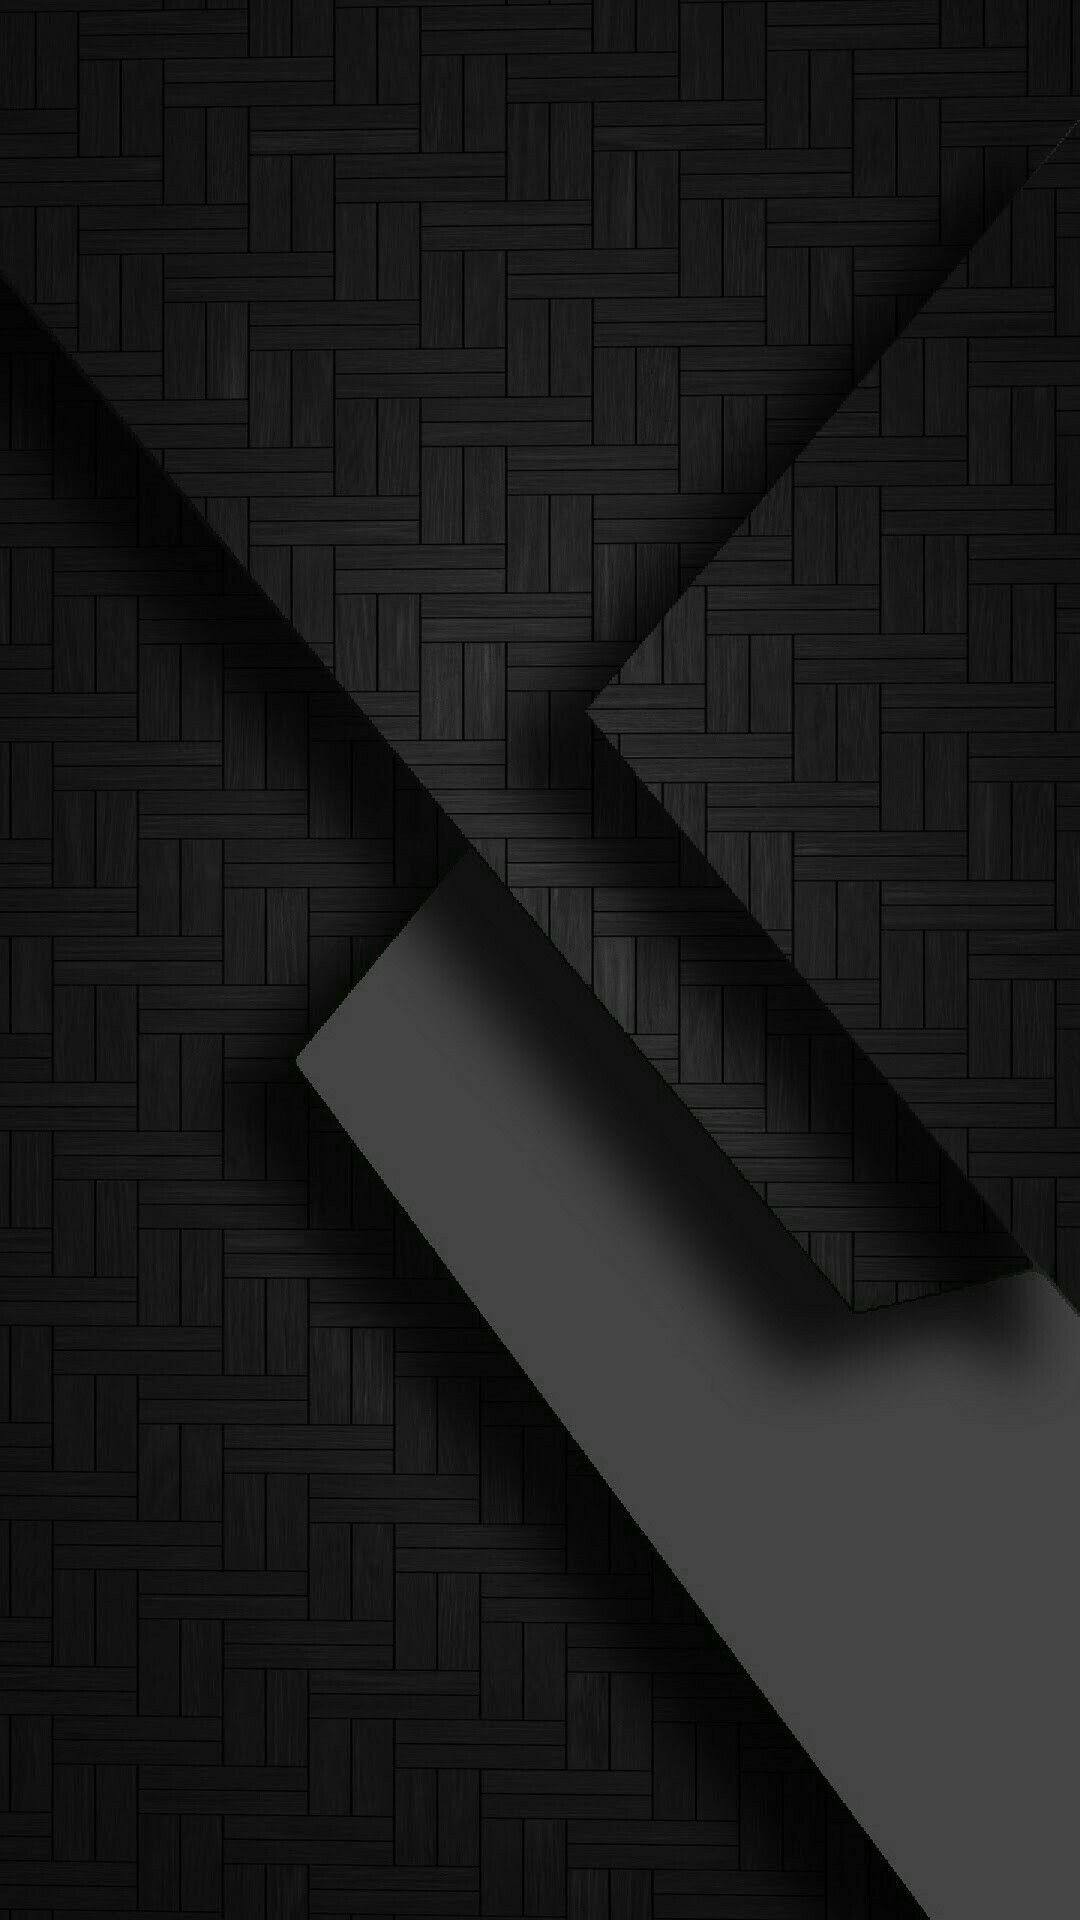 Wallpaper of dark and black background #wallpaper #background